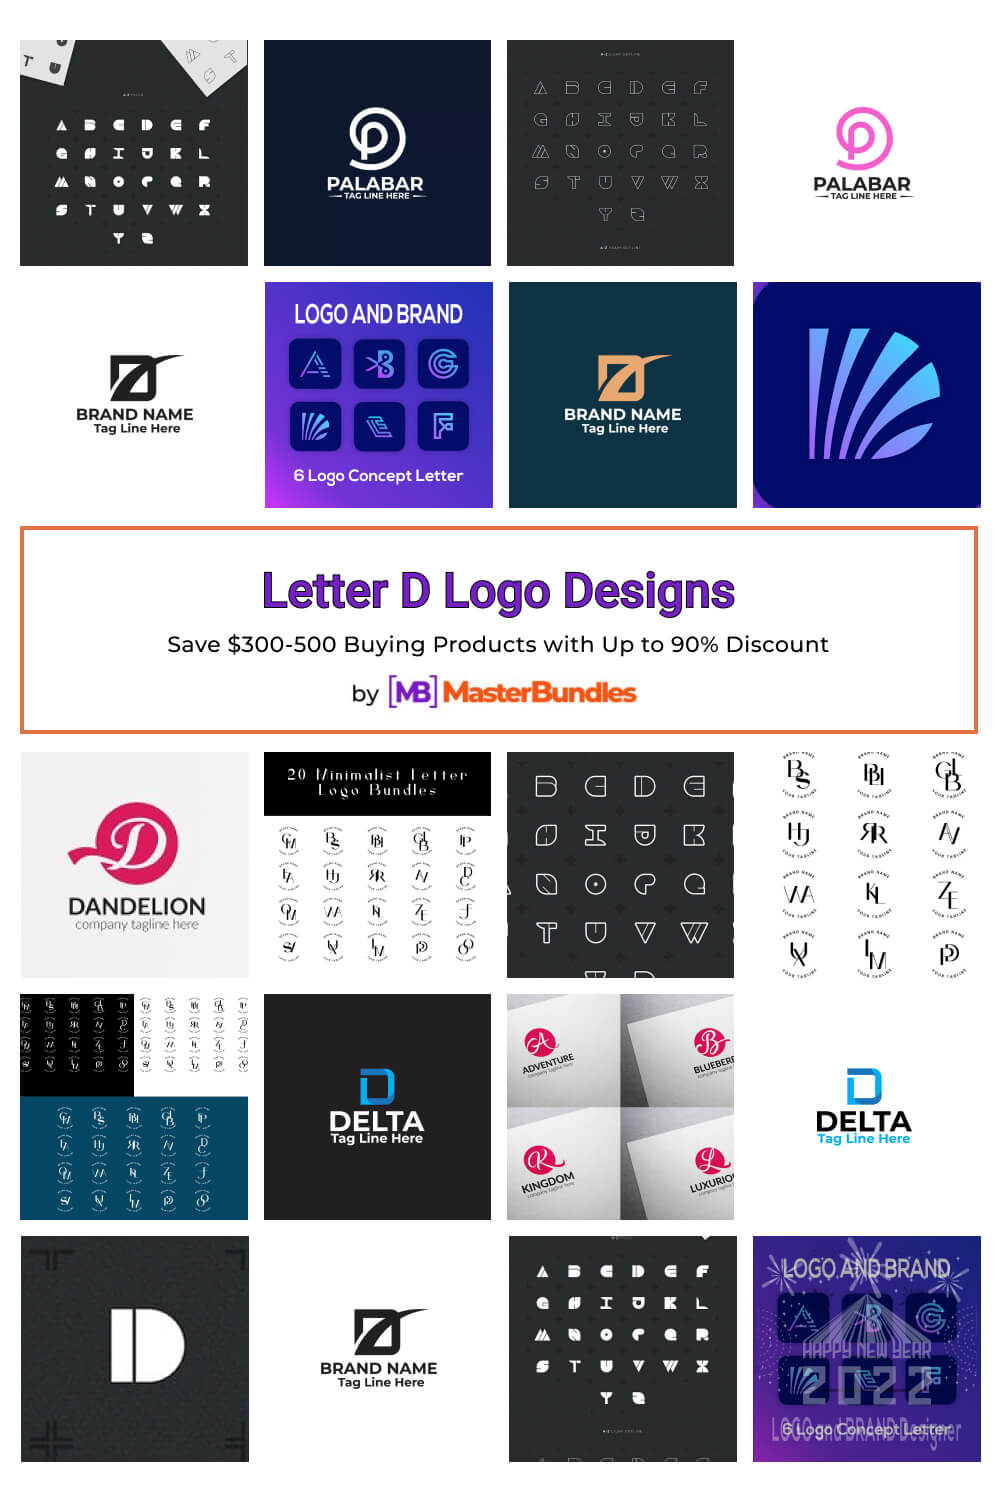 letter d logo designs pinterest image.